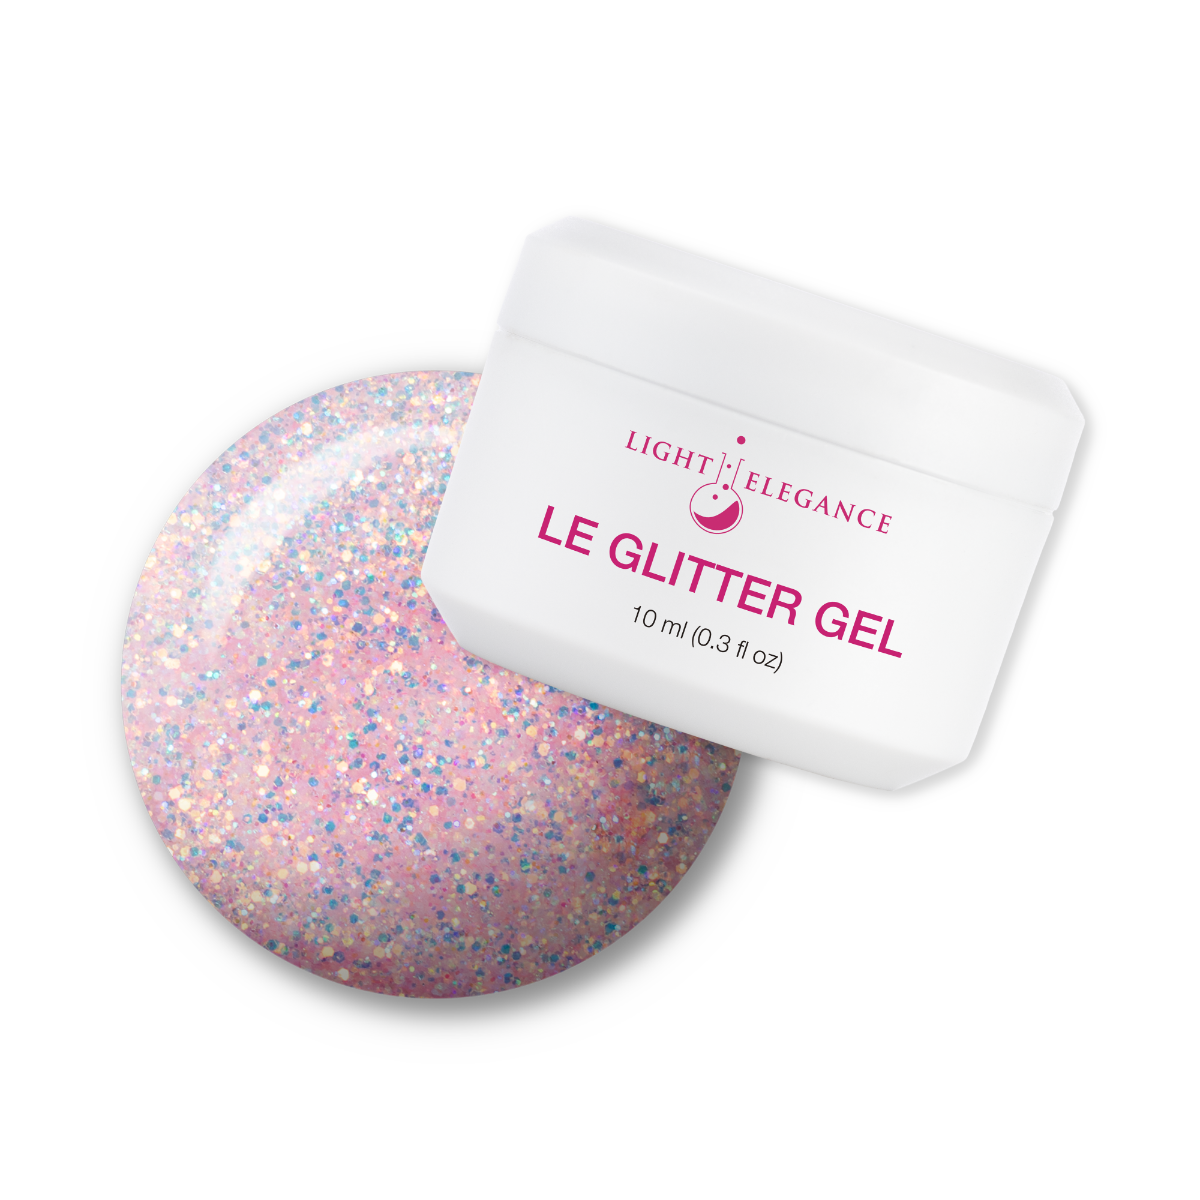 Light Elegance Glitter Gel - Bee in Your Bonnet :: New Packaging